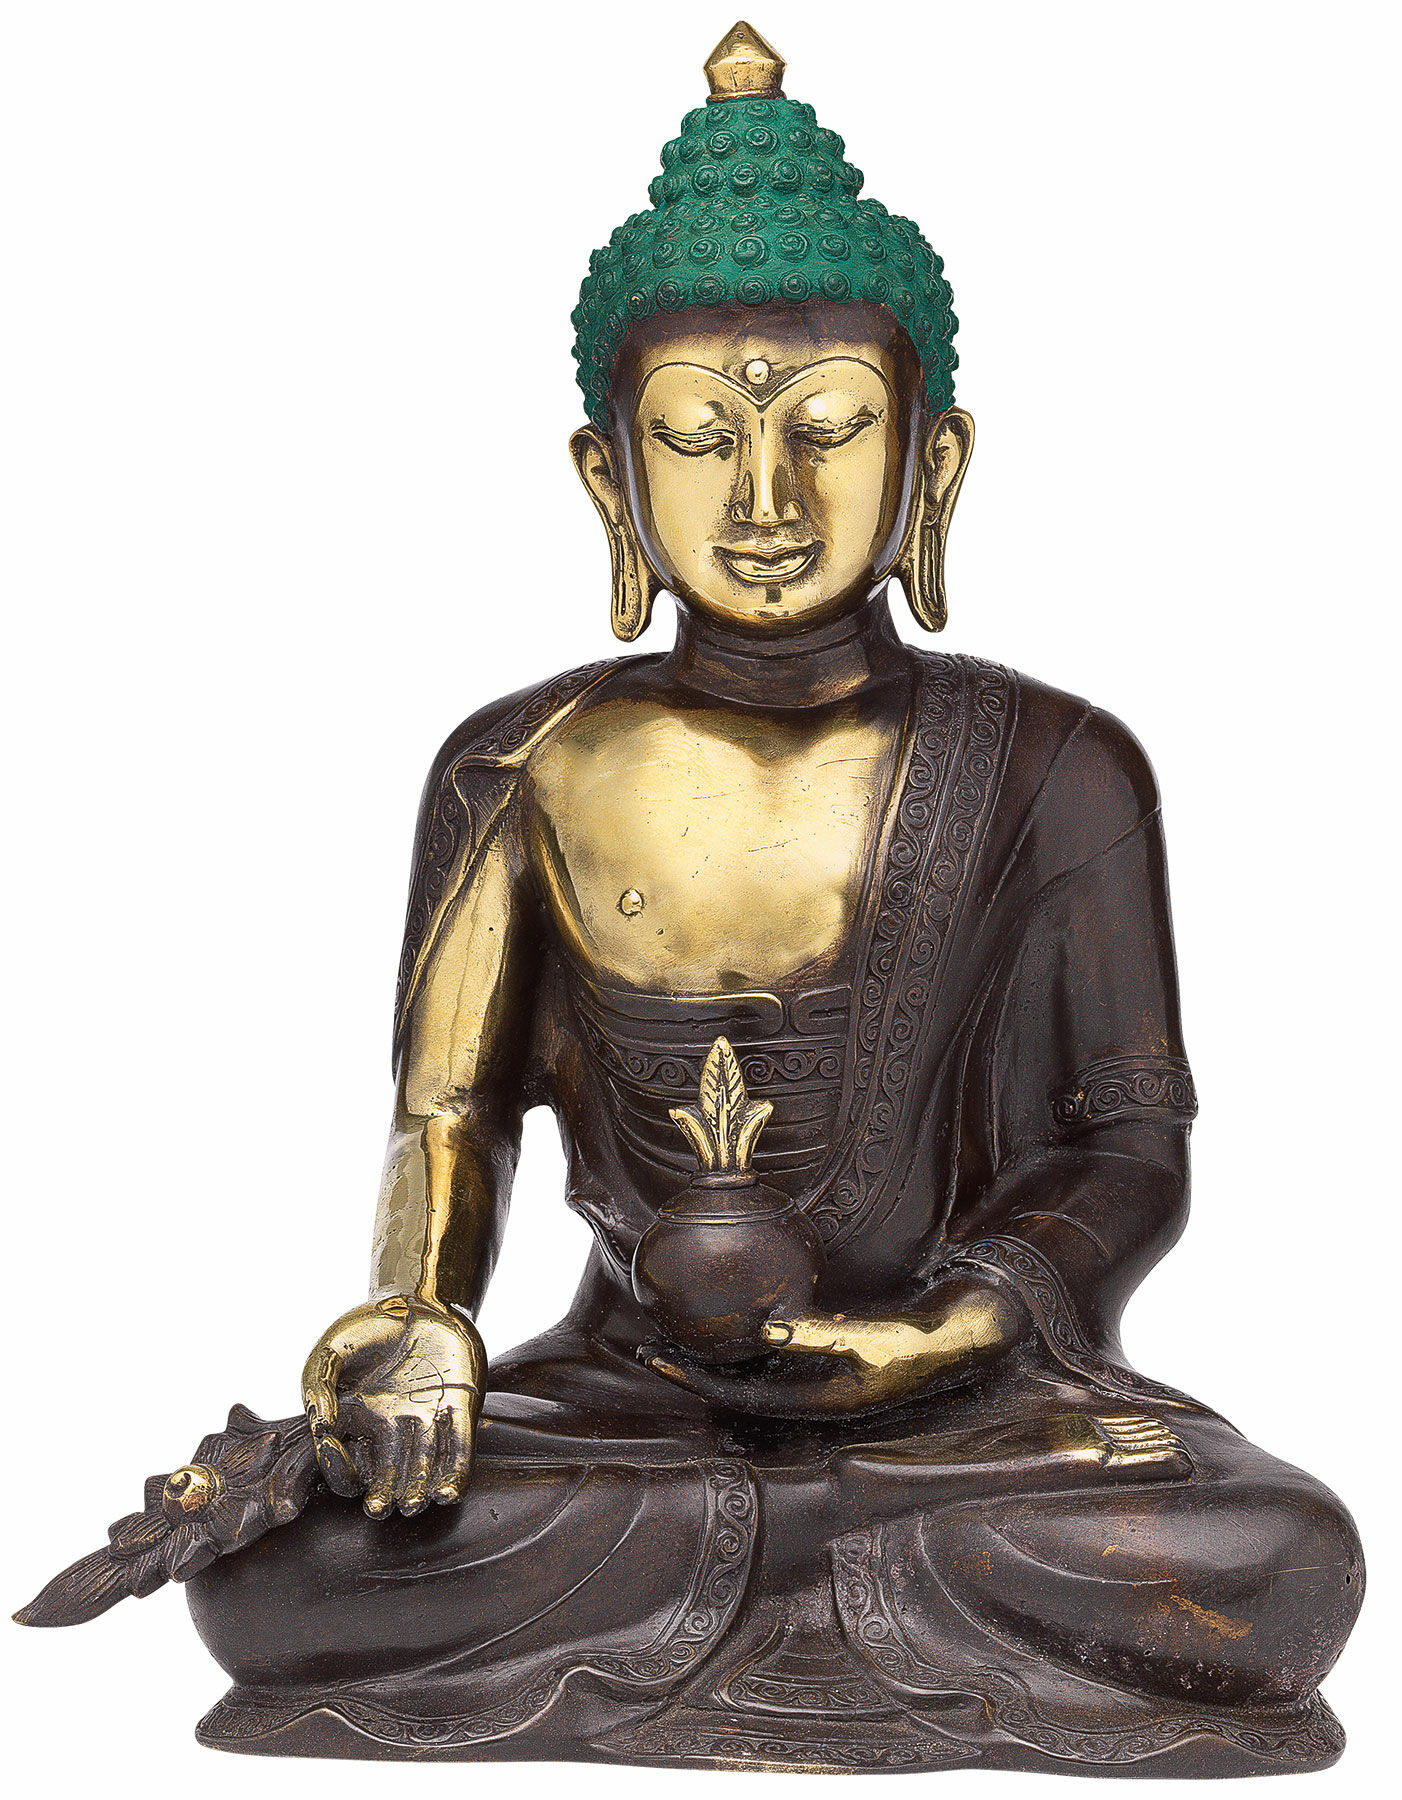 Sculpture "Meditating Buddha", bronze